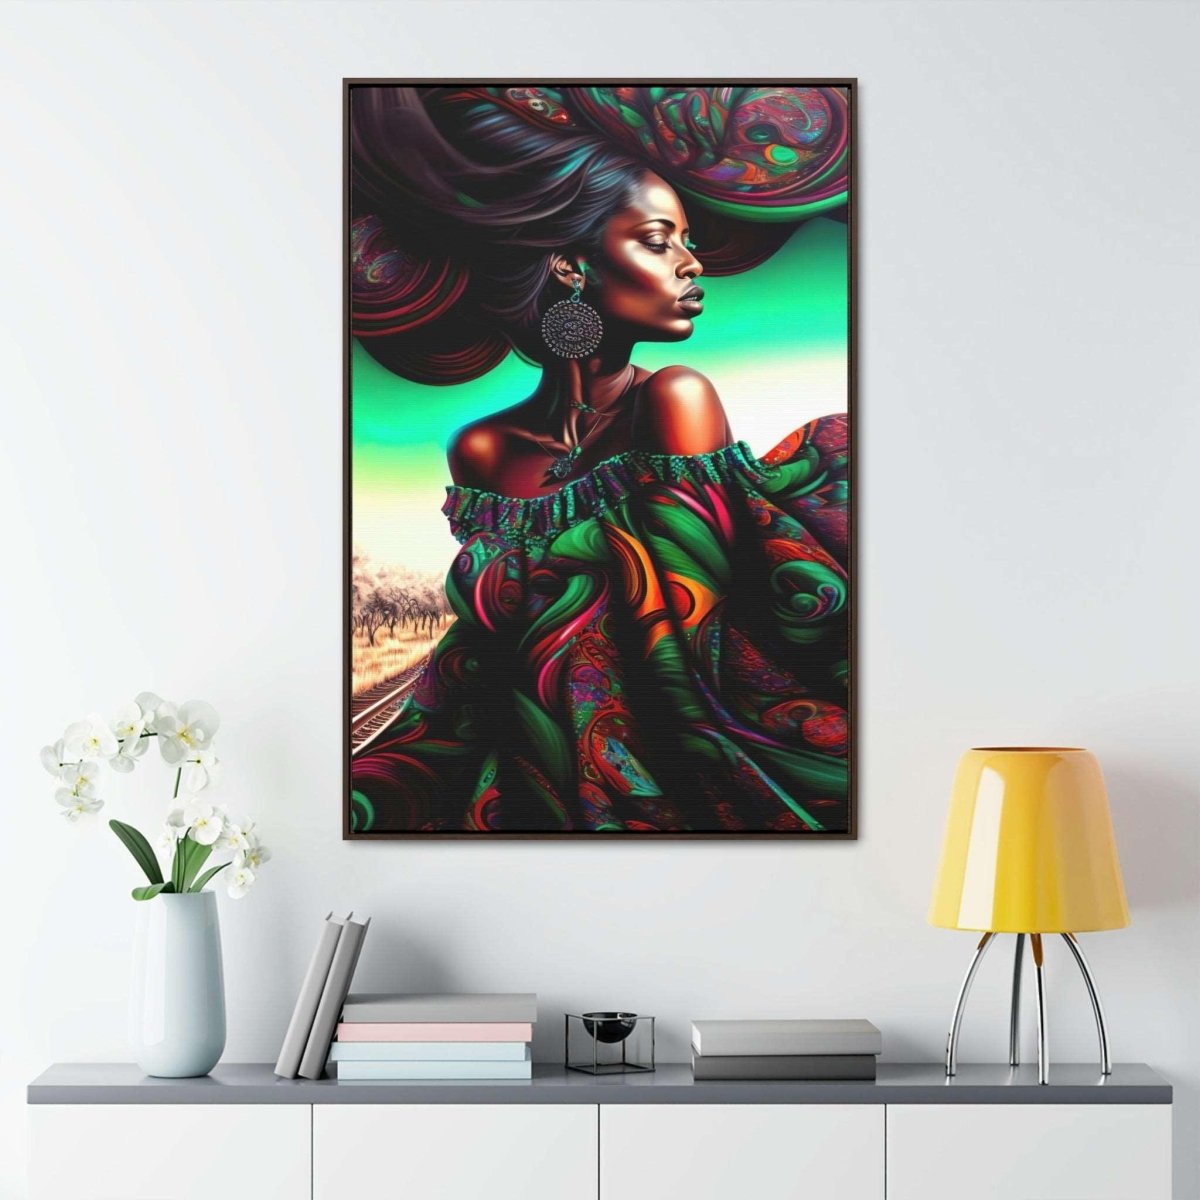 Beautiful Indian Woman Digital Abstract Art Framed - HigherFrequencies